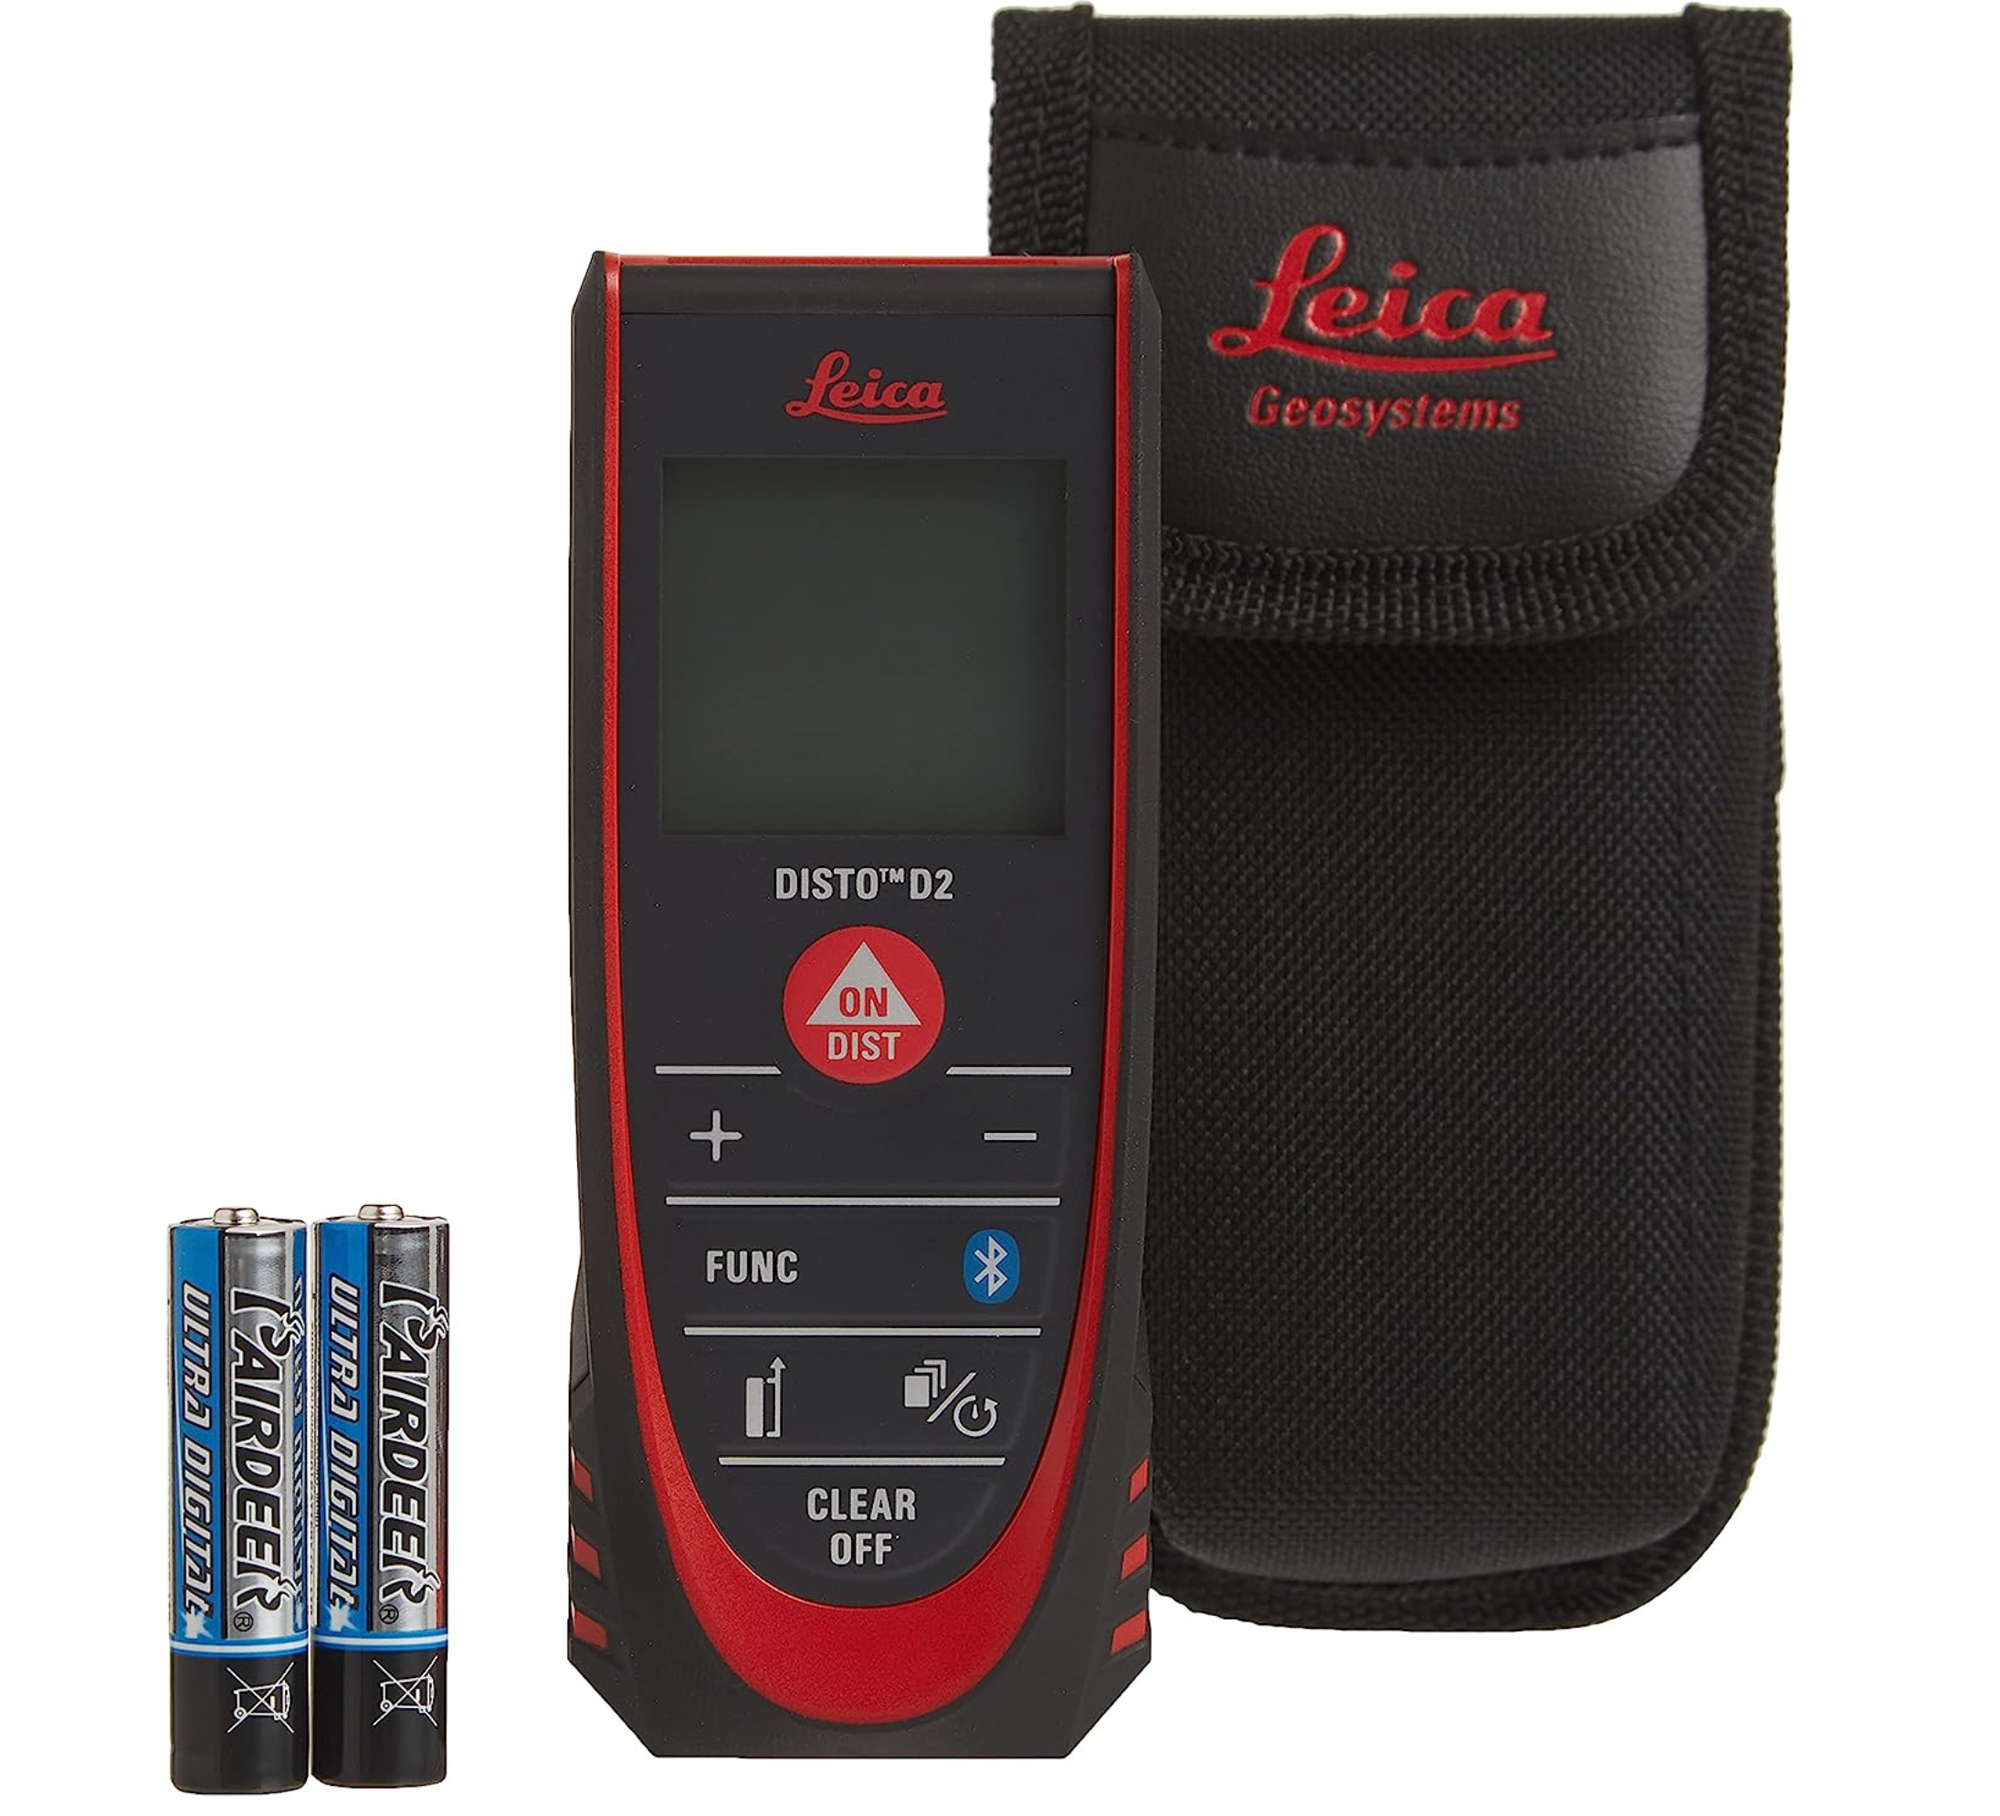 Leica Disco Laser focus device. Very accurate distance measurement